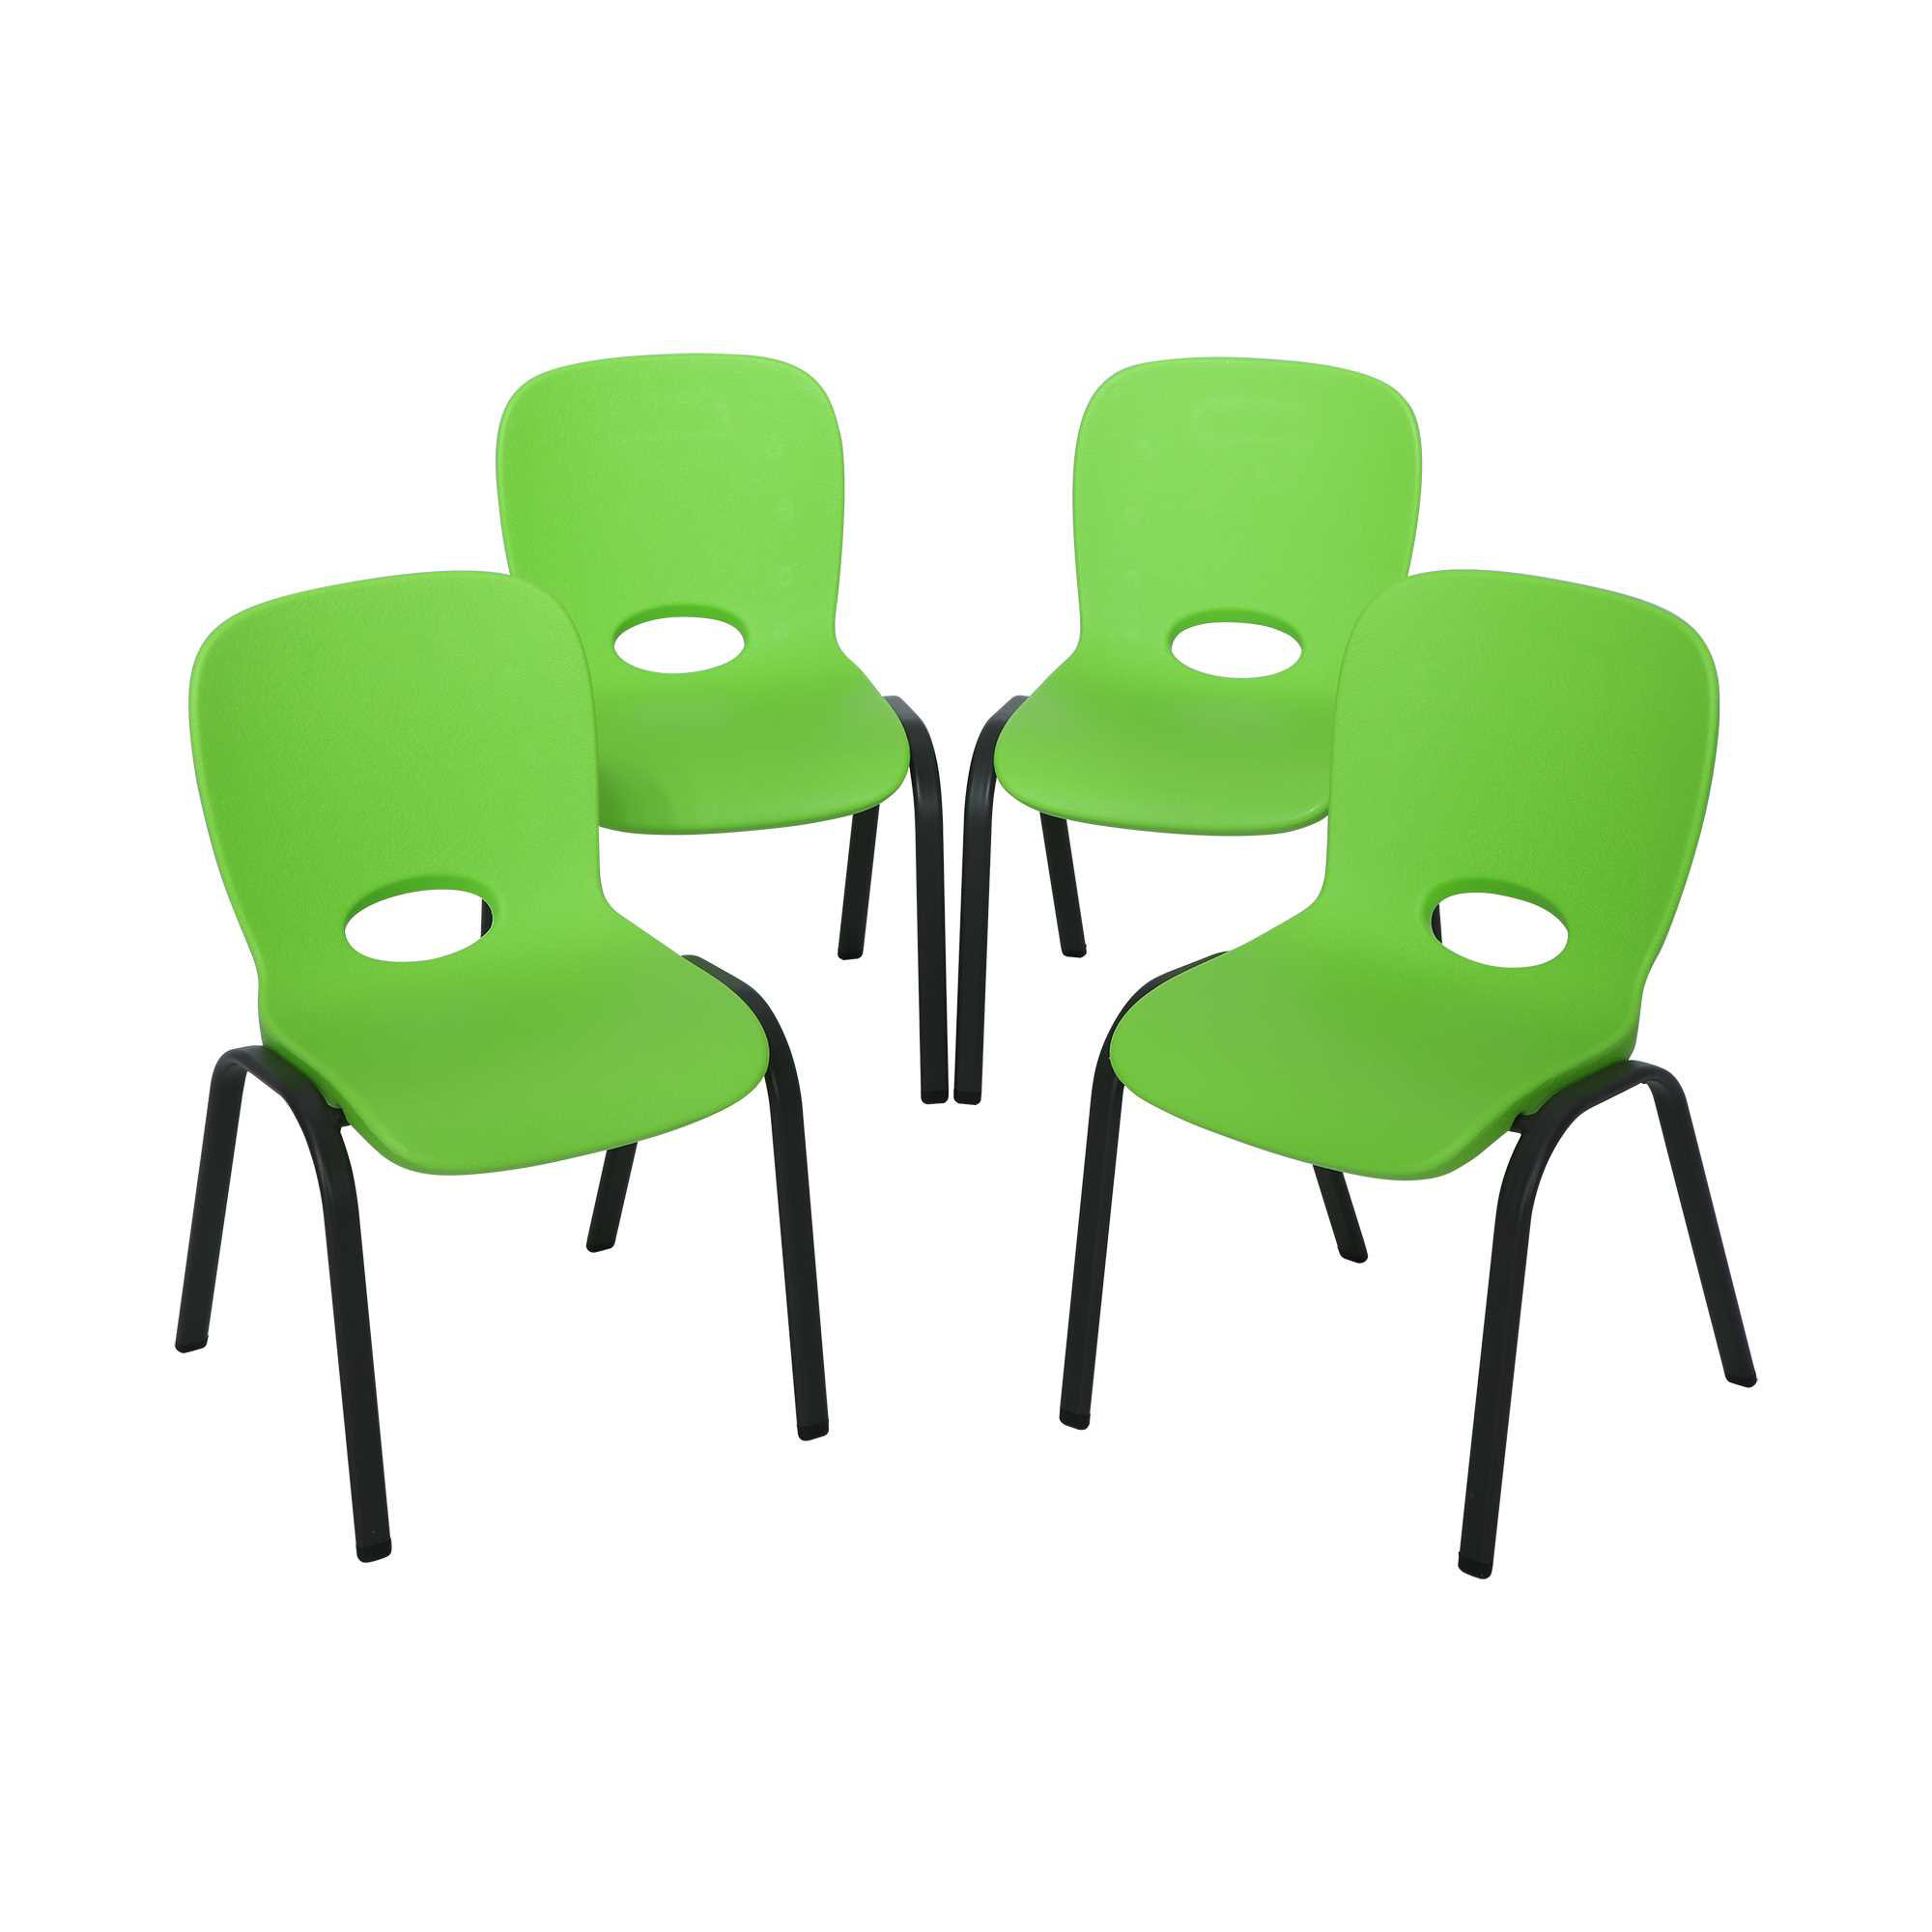 Lifetime 80473 Children Chair Lime Green 38.2 x 36.8 x 59.8 cm 4-Piece 